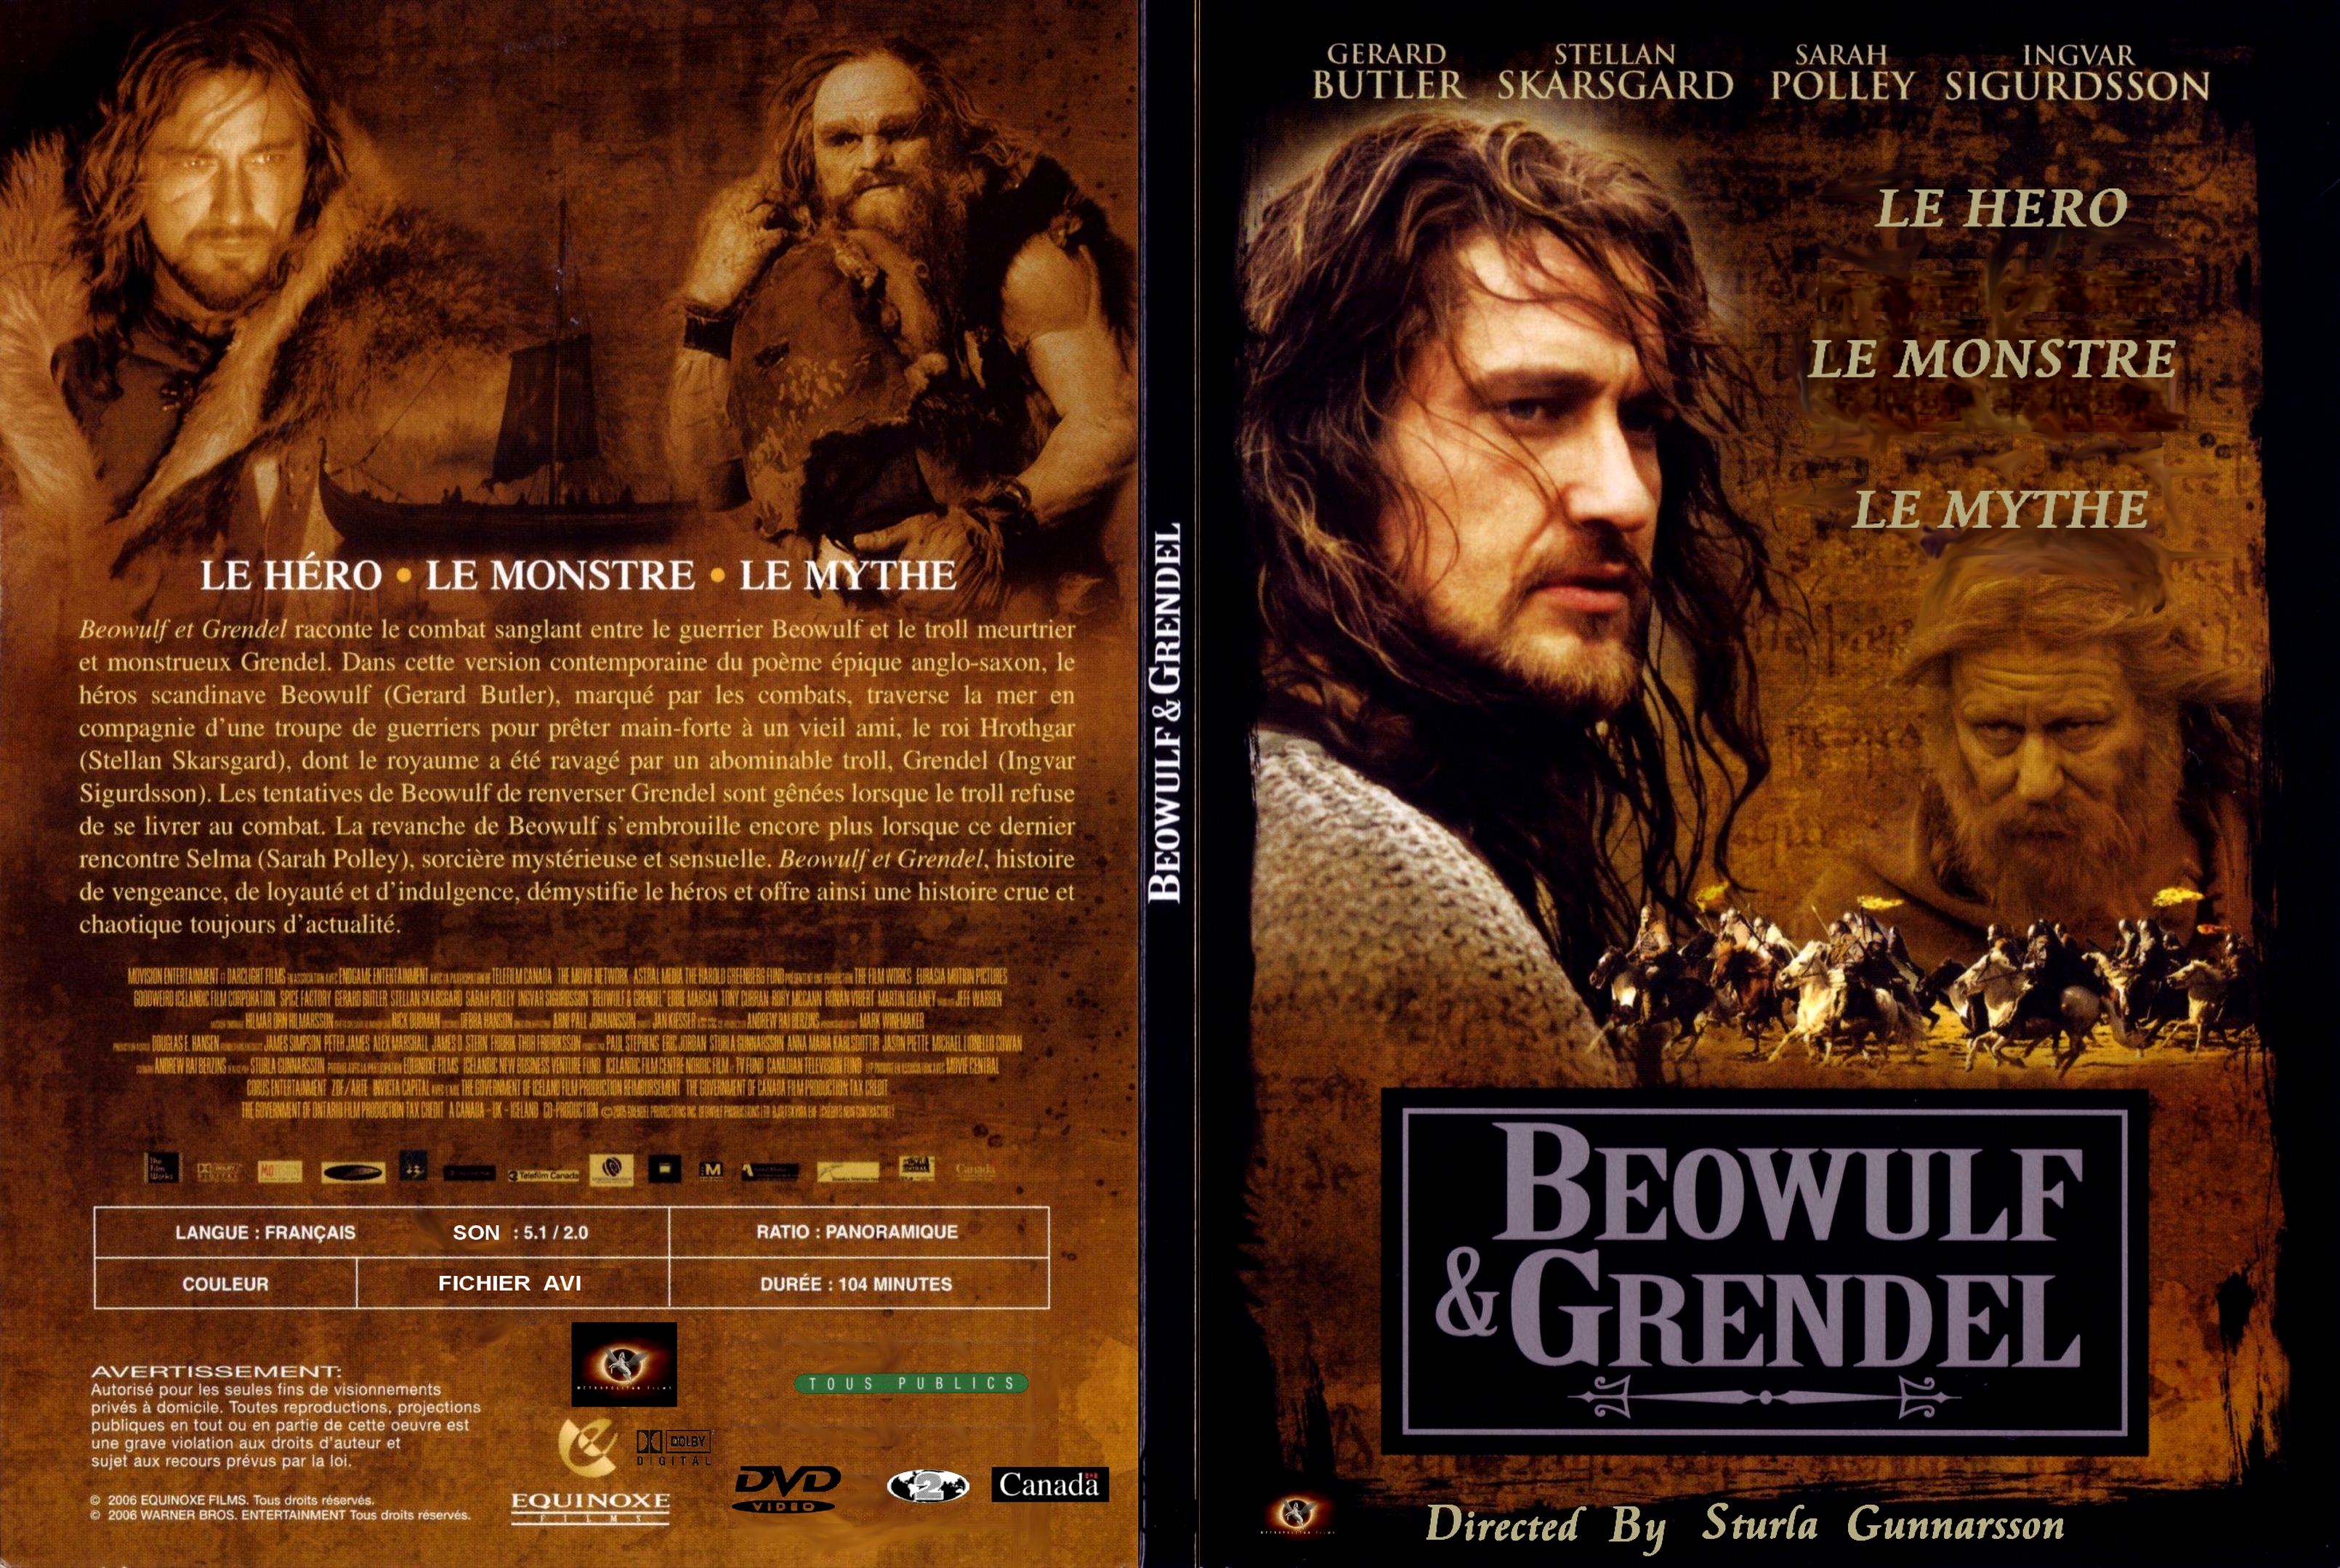 Jaquette DVD Beowulf & Grendel - SLIM custom